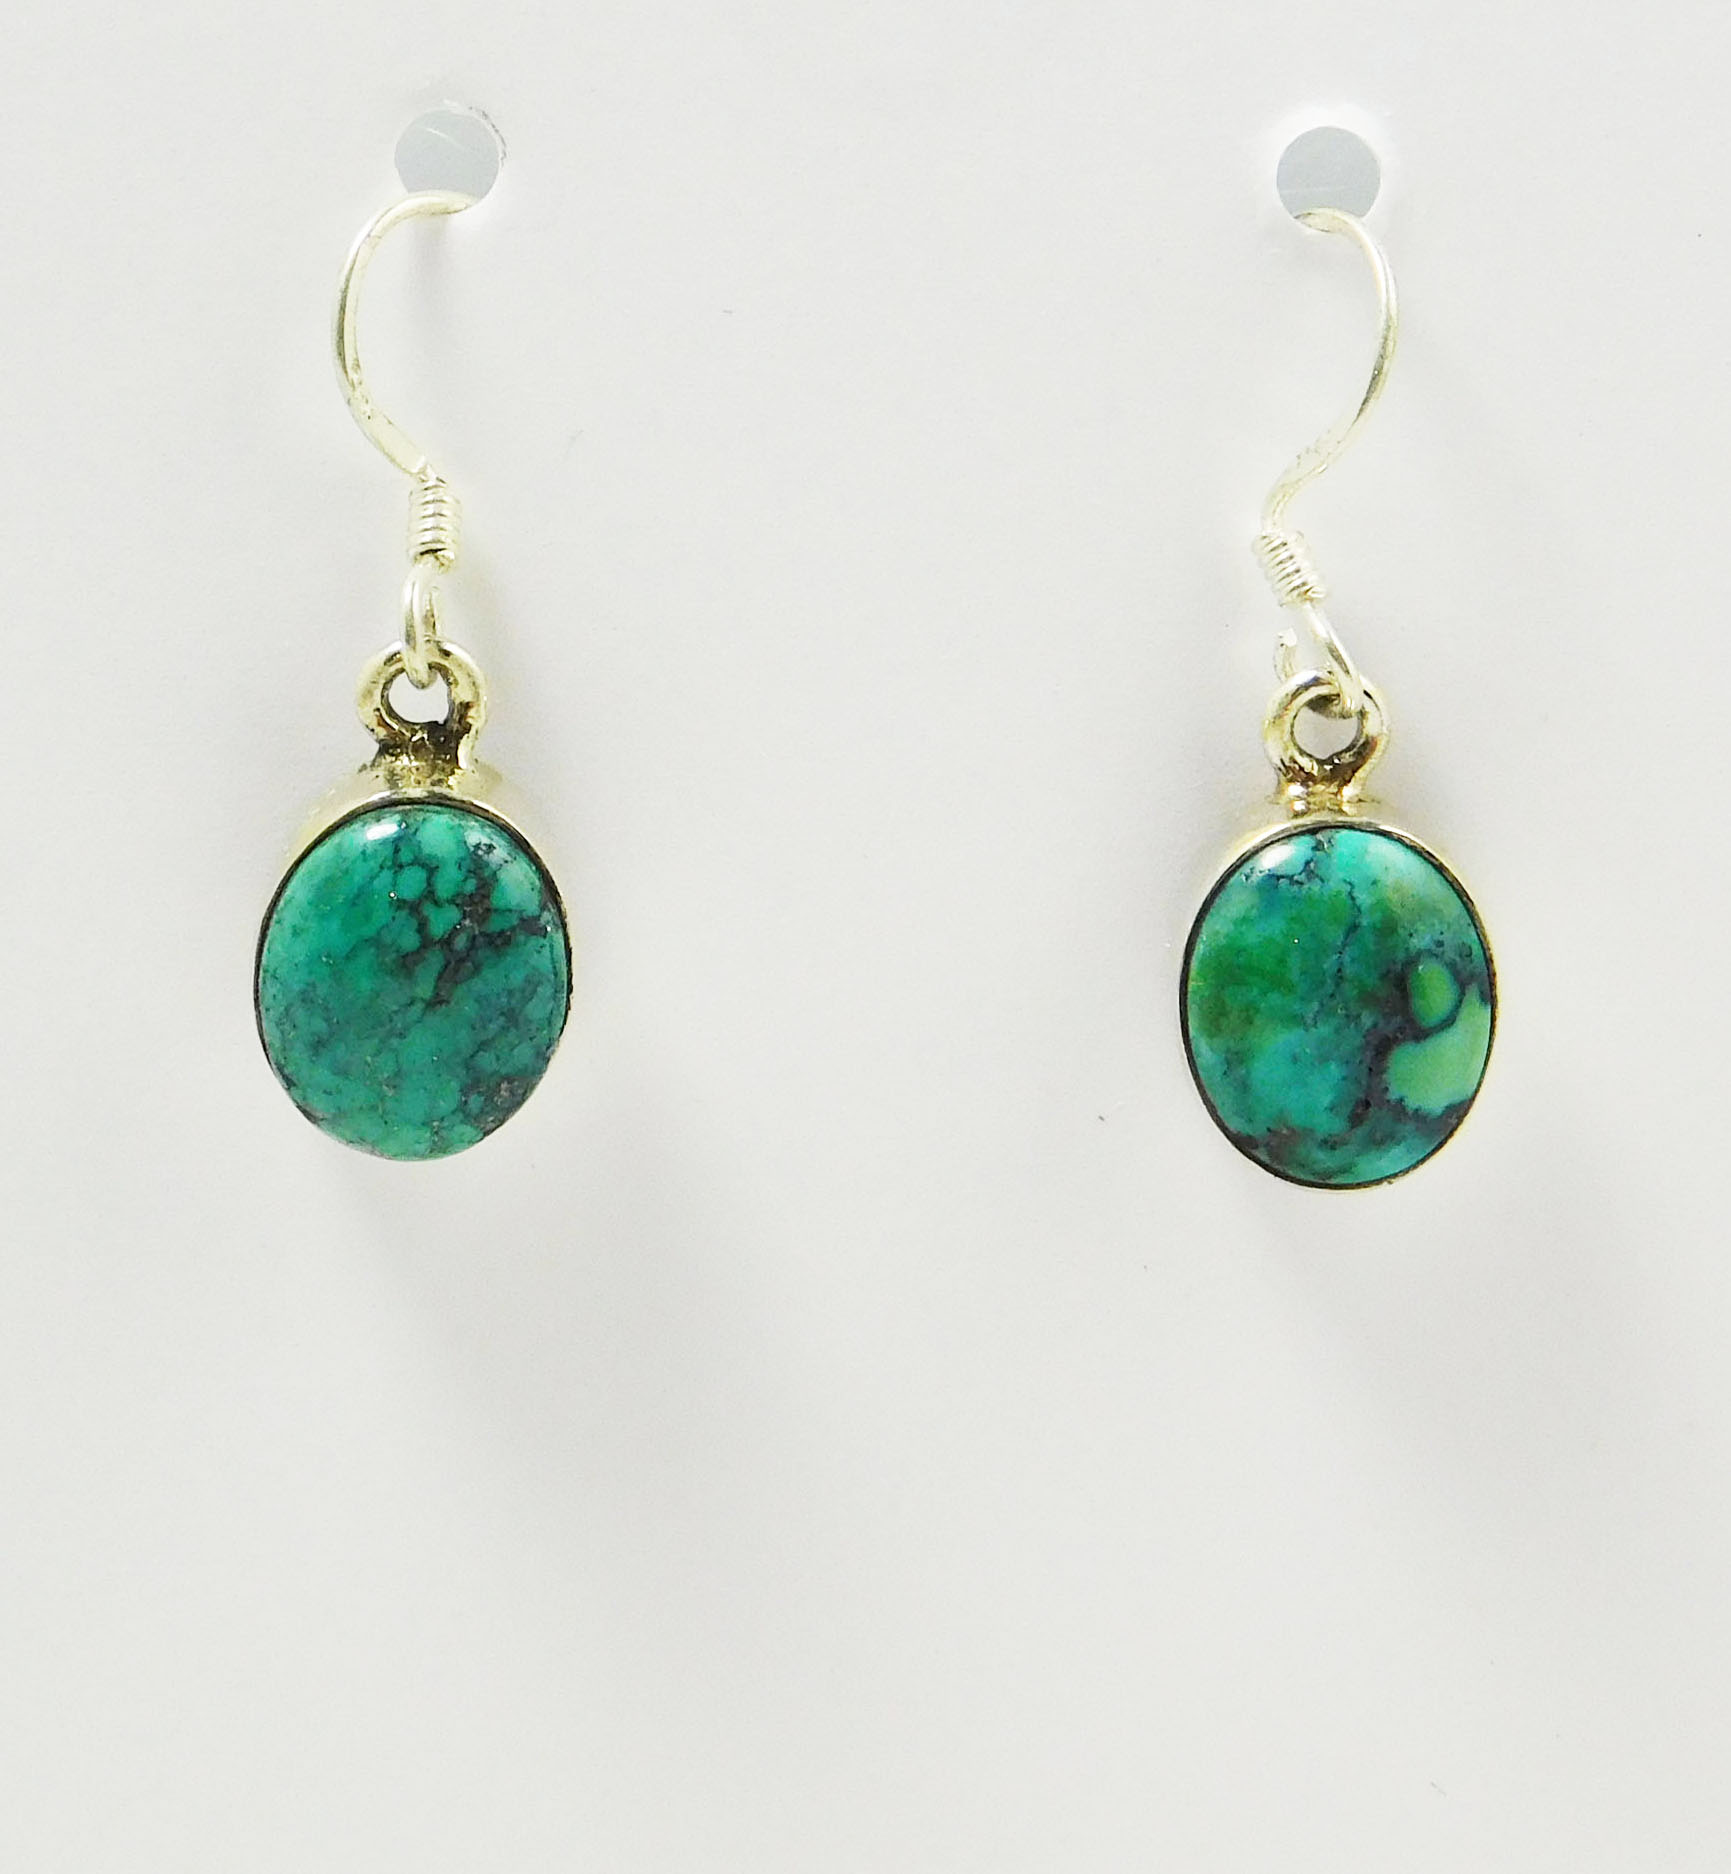 Earrings, Turquoise in sterling silver